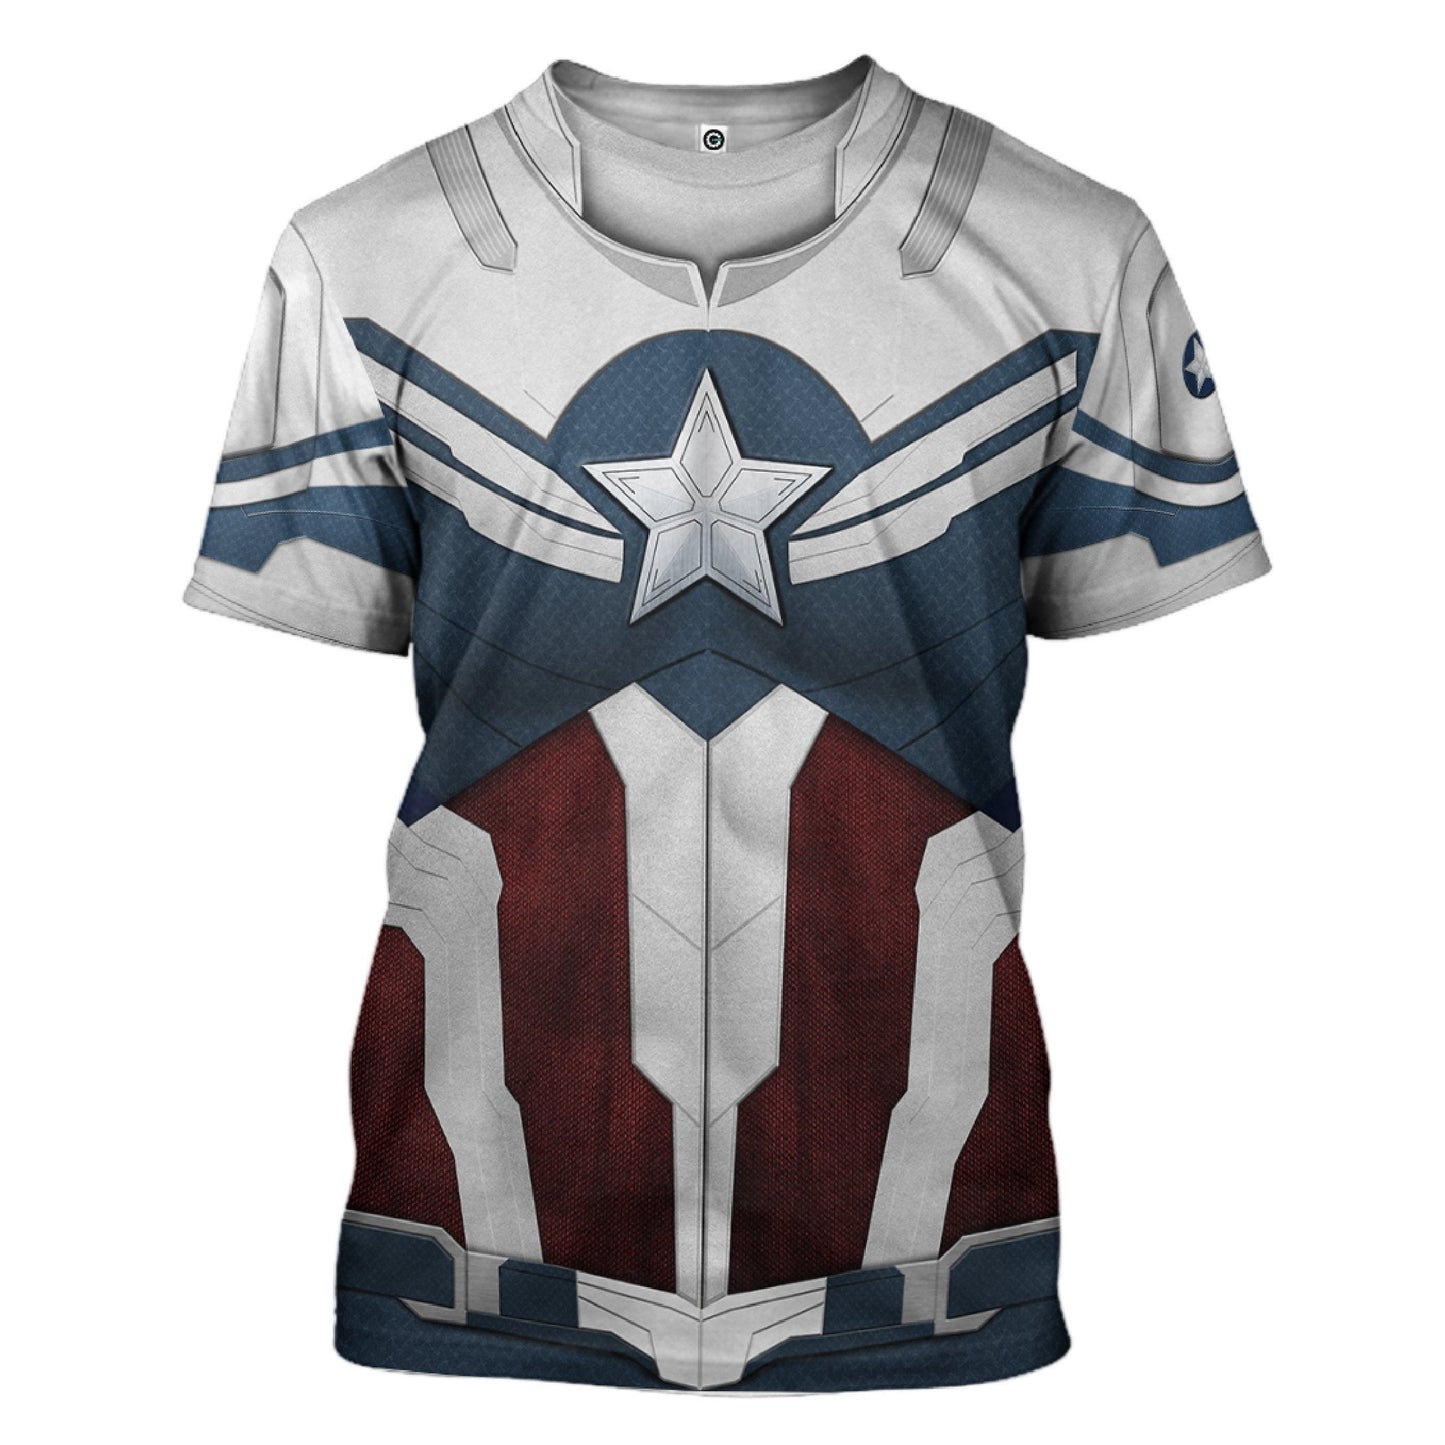 MV Shirt Captain America T-shirt Sam Wilson Captain America Sit Costume White Blue Hoodie MV Hoodie